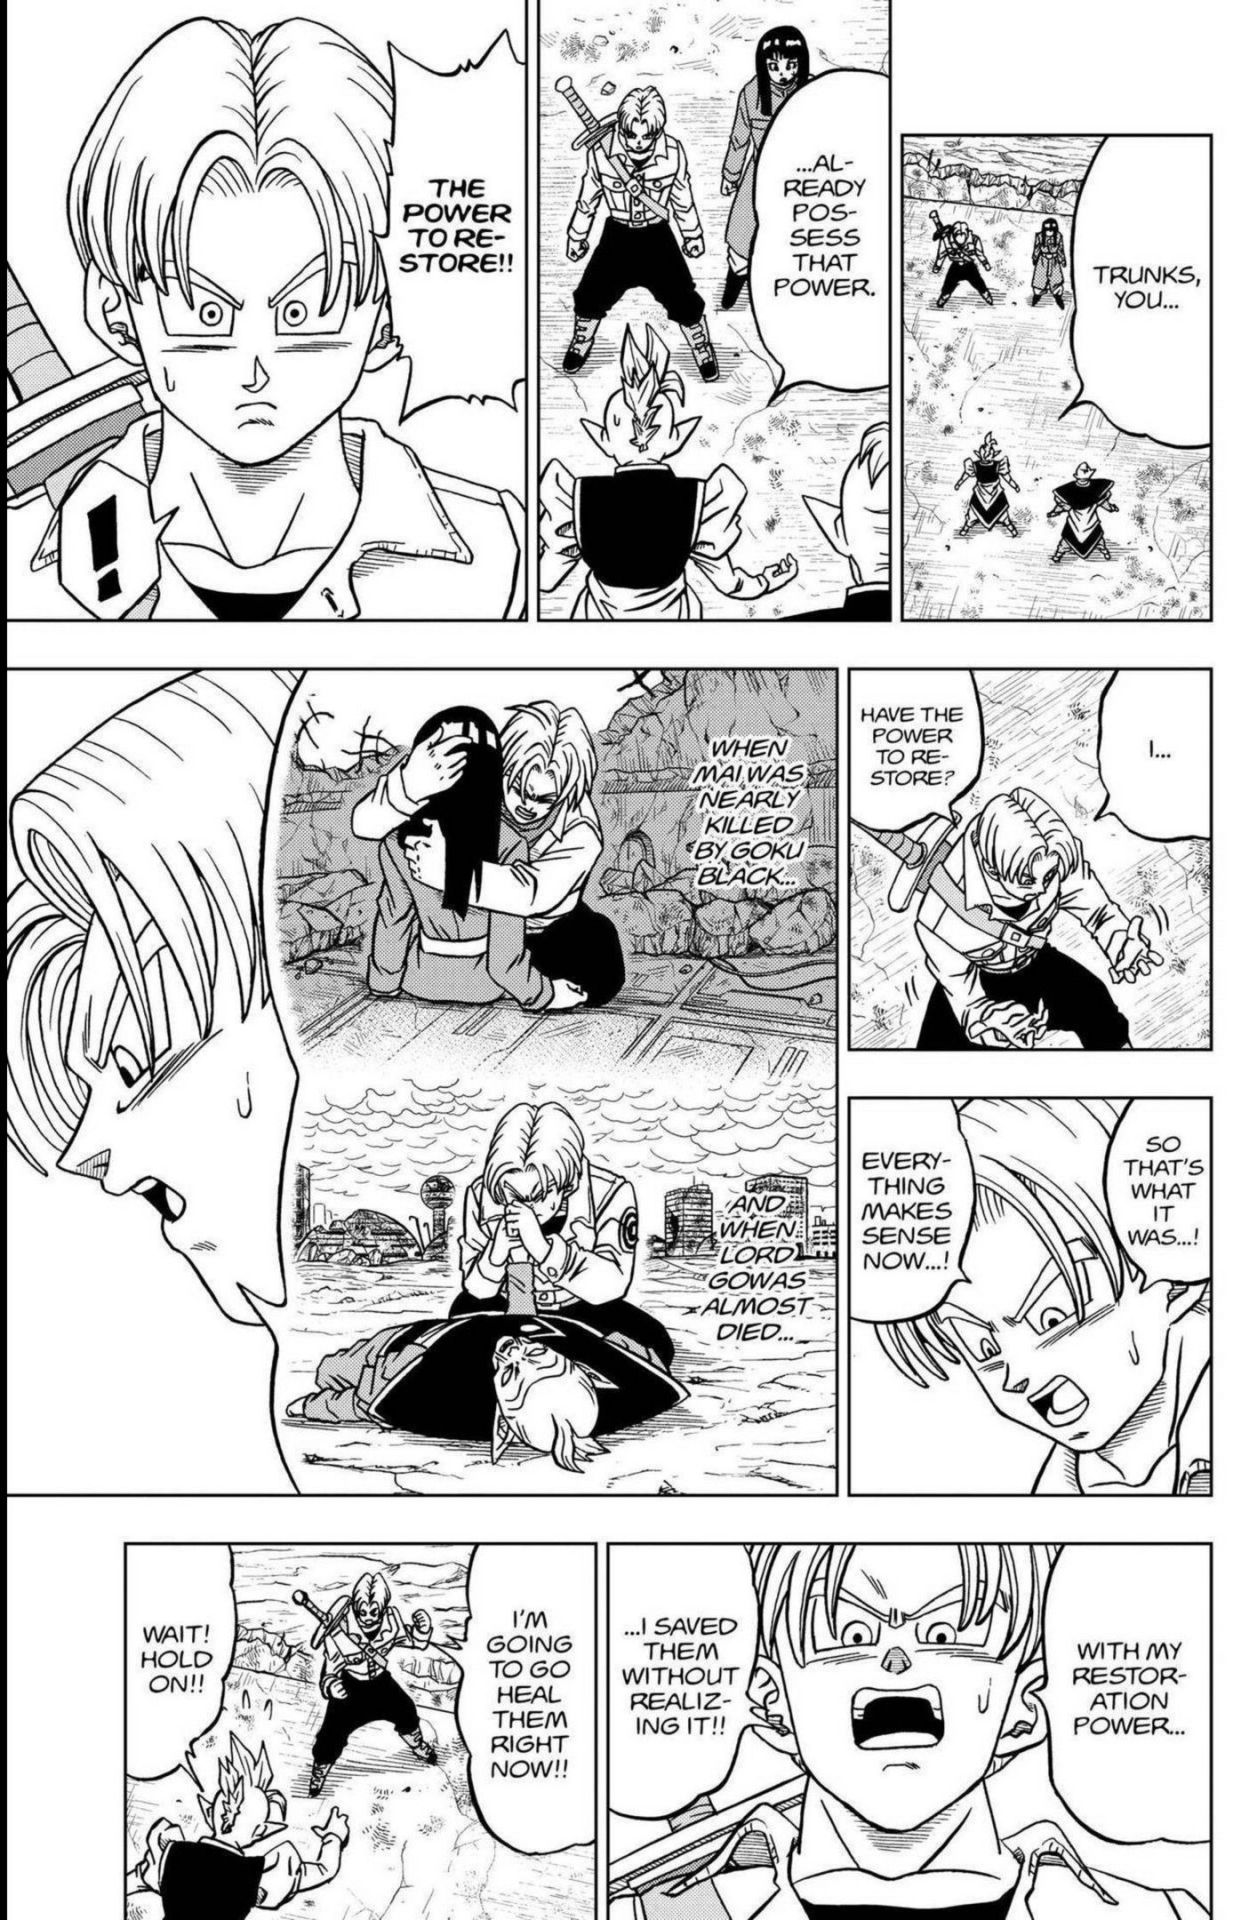 Dragon Ball Super Manga Chapter 21 Review - Goku Learns The Mafuba! Goku  Black Beats Down Trunks 